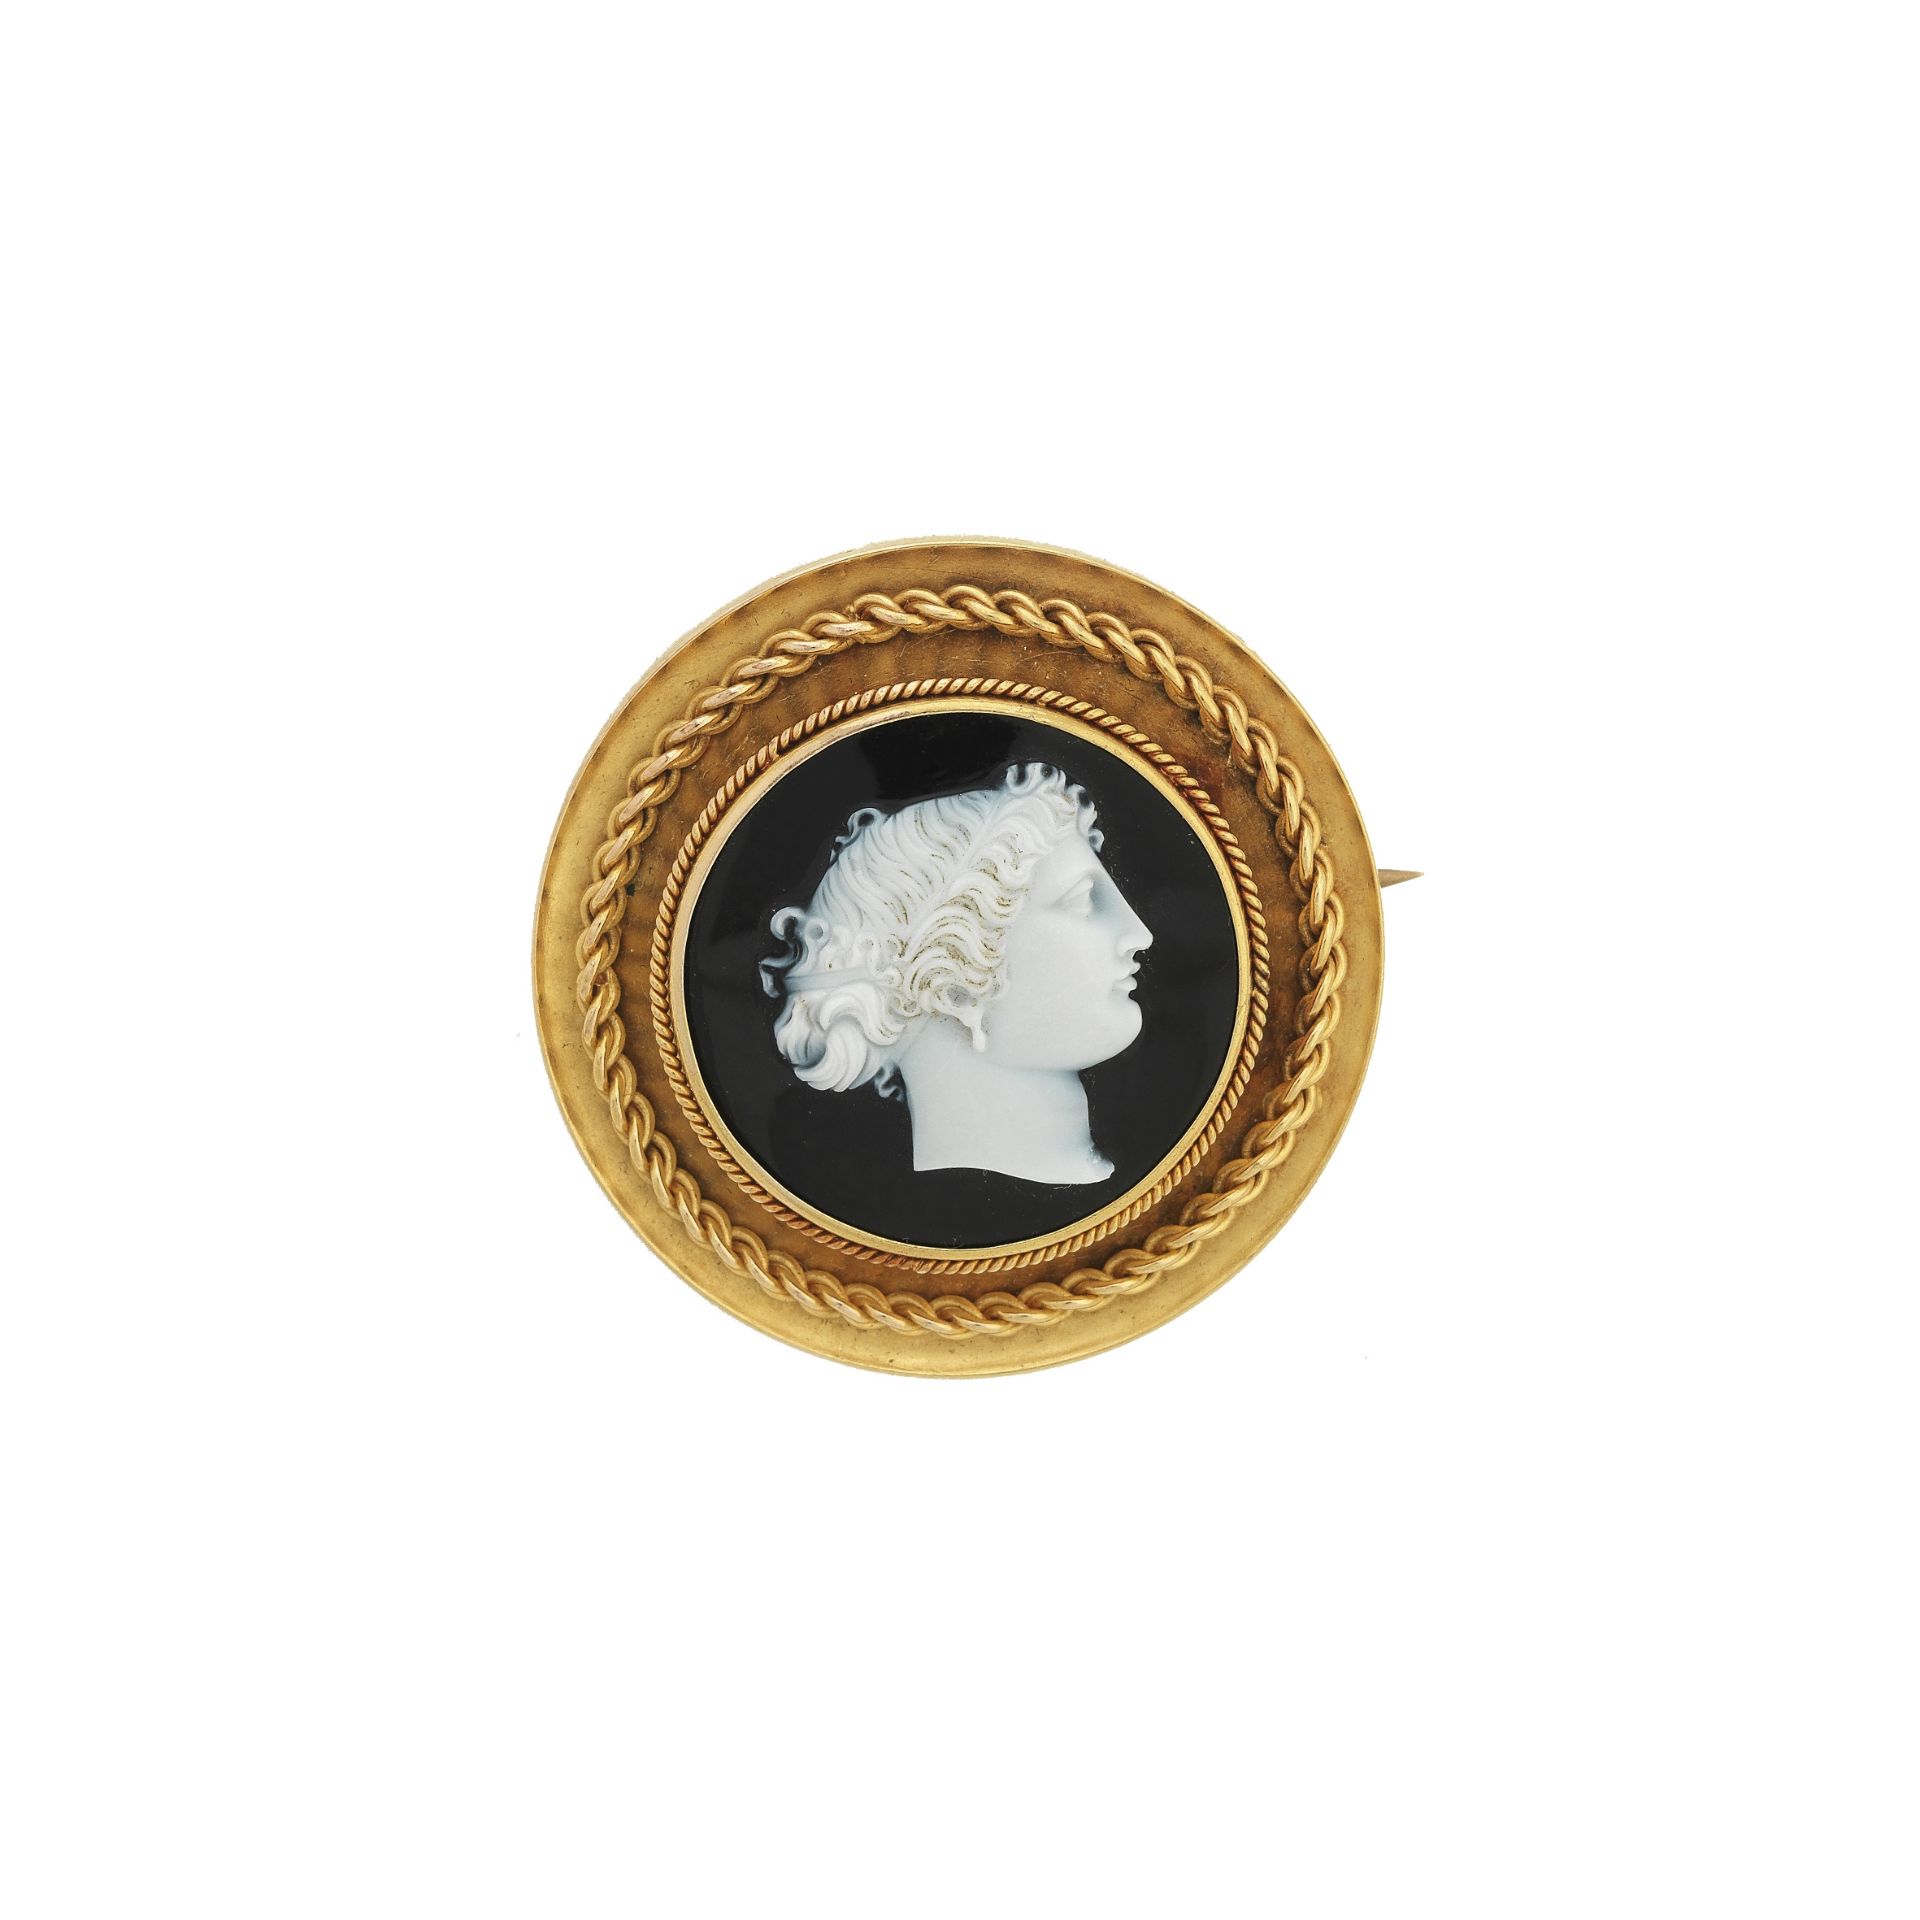 An onyx cameo brooch, Victorian